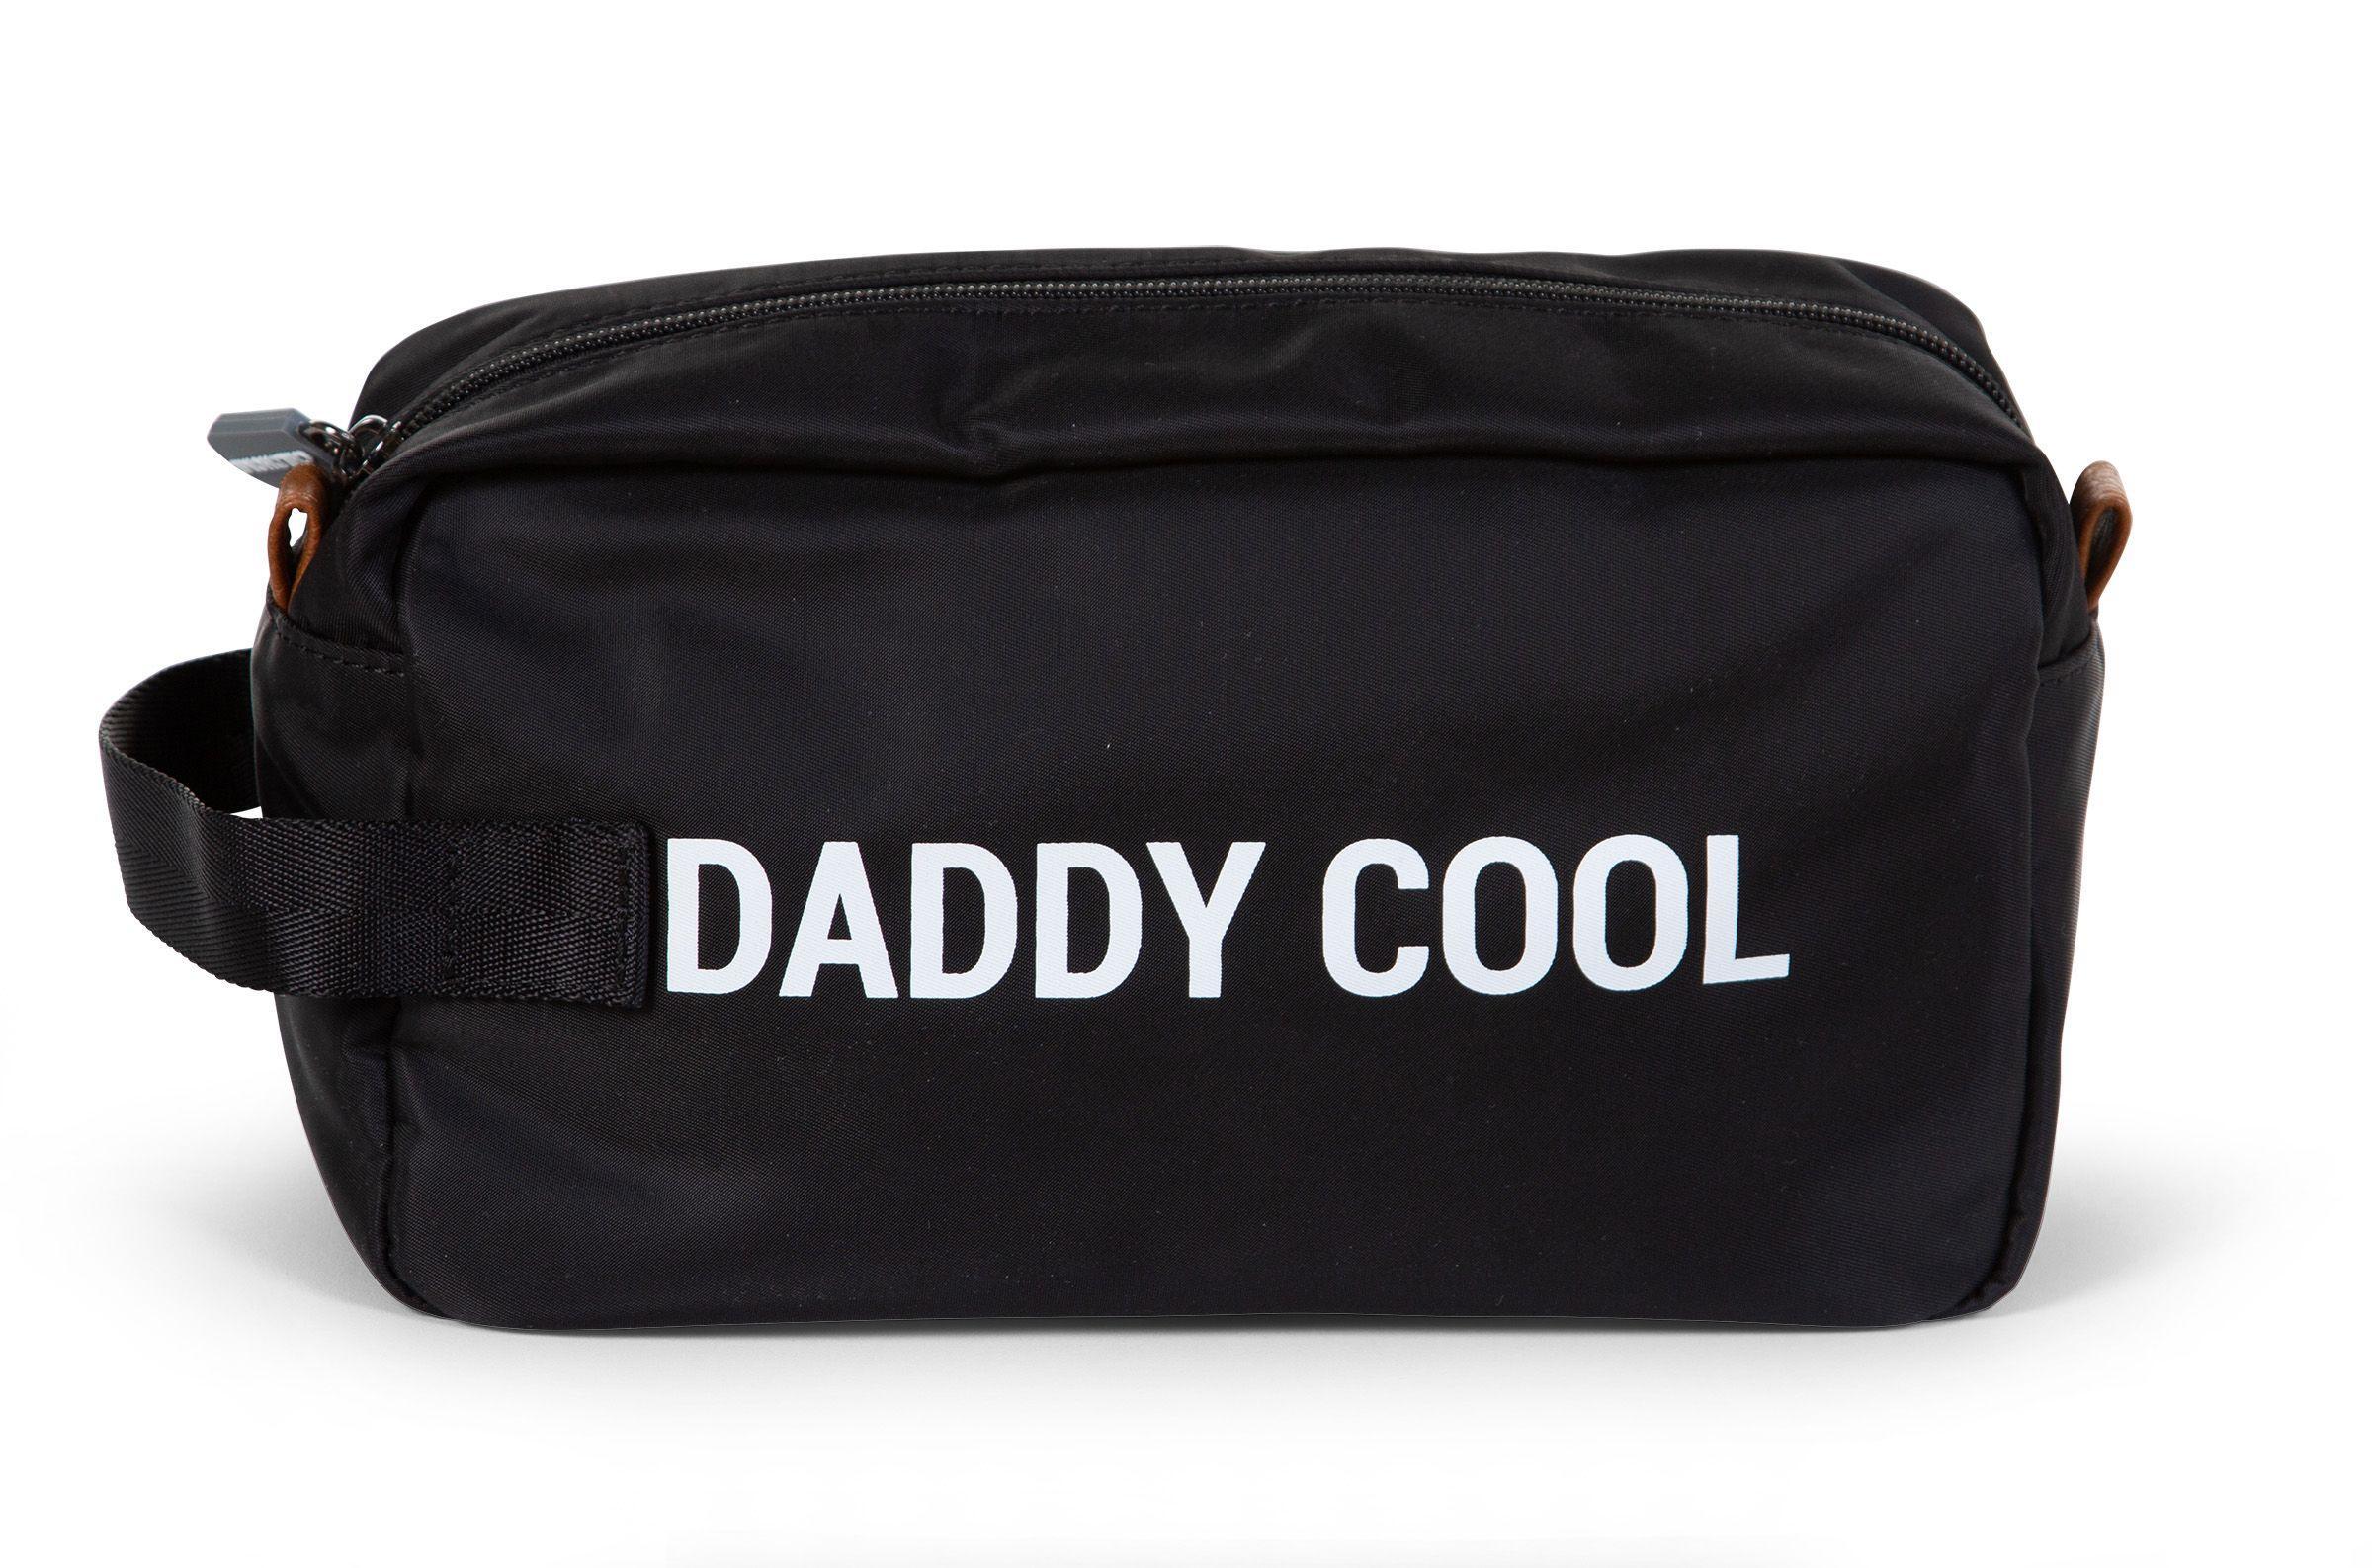 Childhome daddy cool toiletry bag black/white Black/White - Childhome